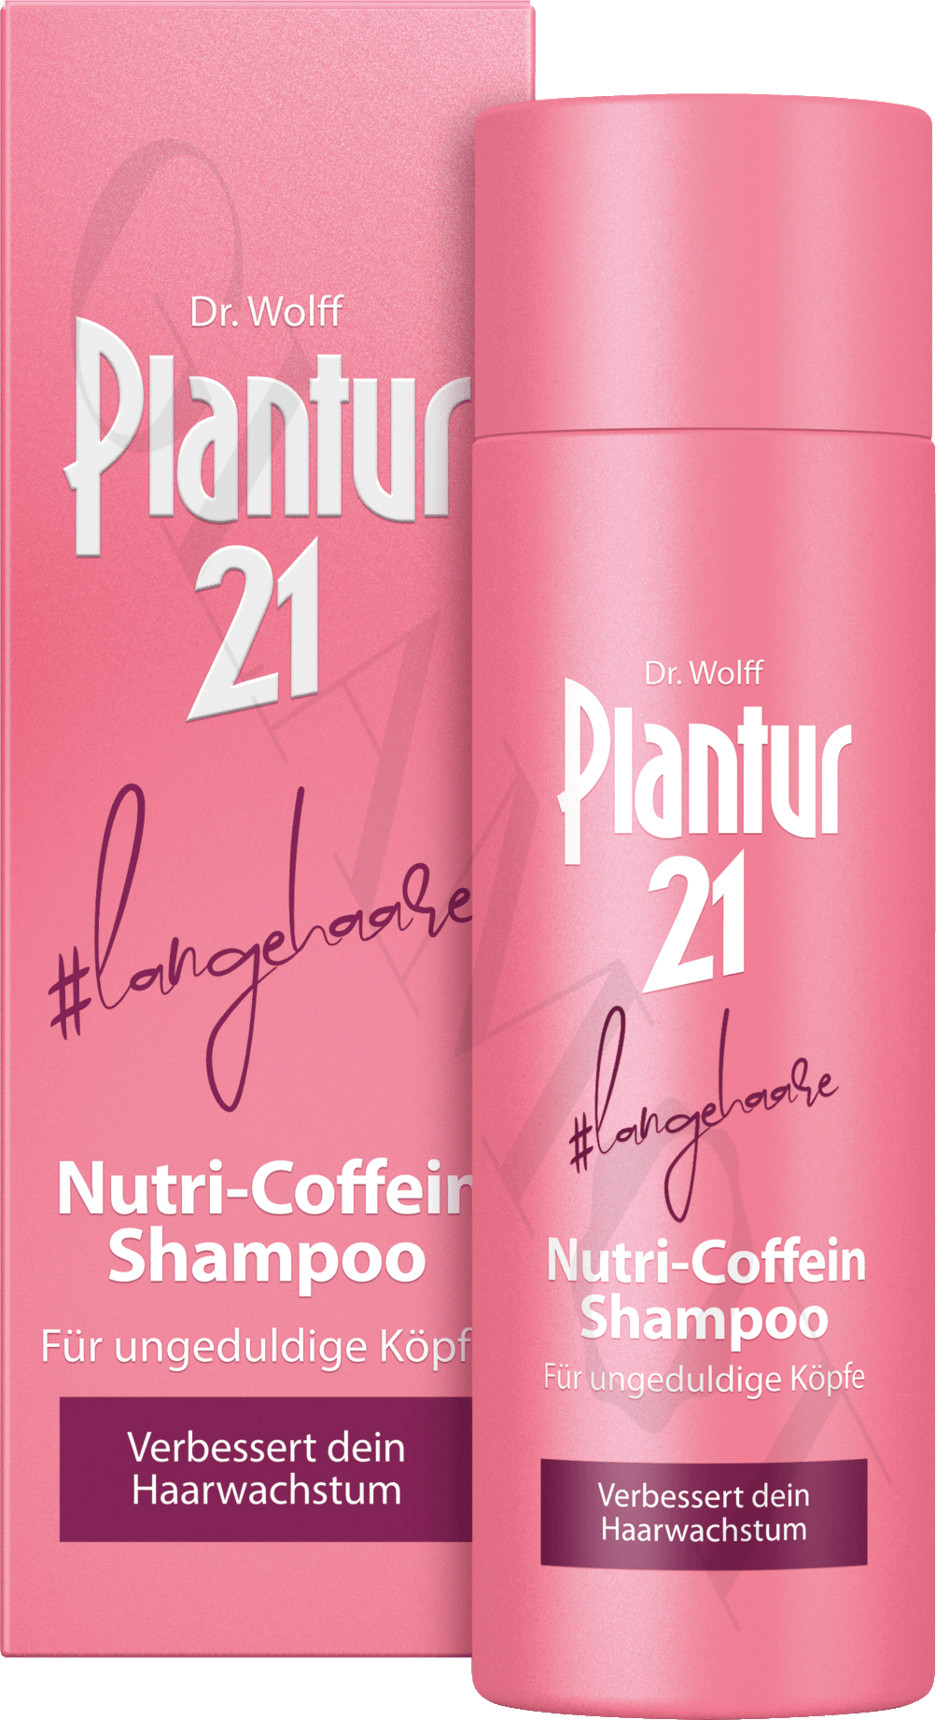 Plantur 21 Nutri-Coffein hair | glamot.com